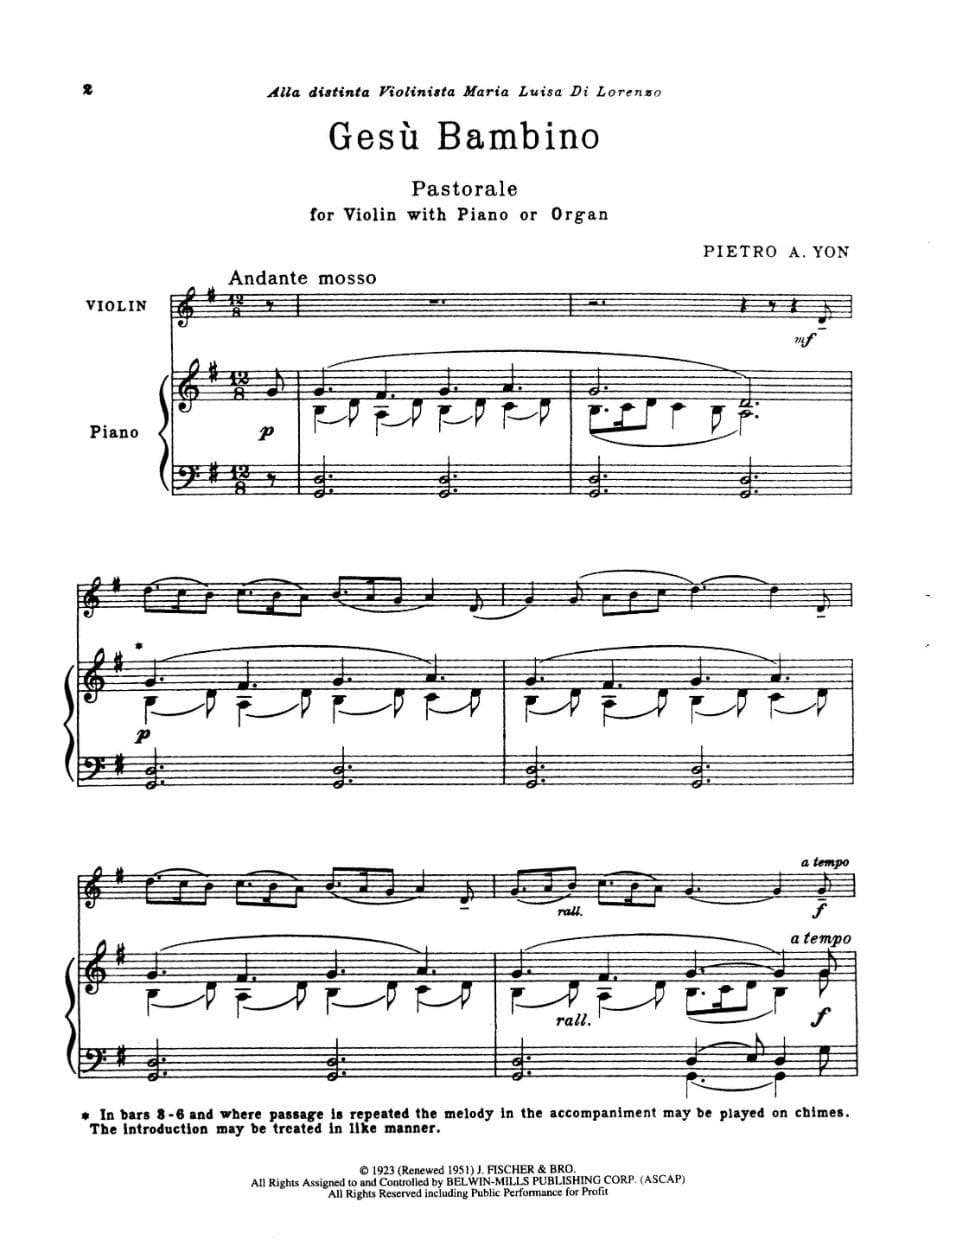 Yon, Pietro - Gesu Bambino (Pastorale) - Violin and Piano (or Organ) - Alfred Music Publishing